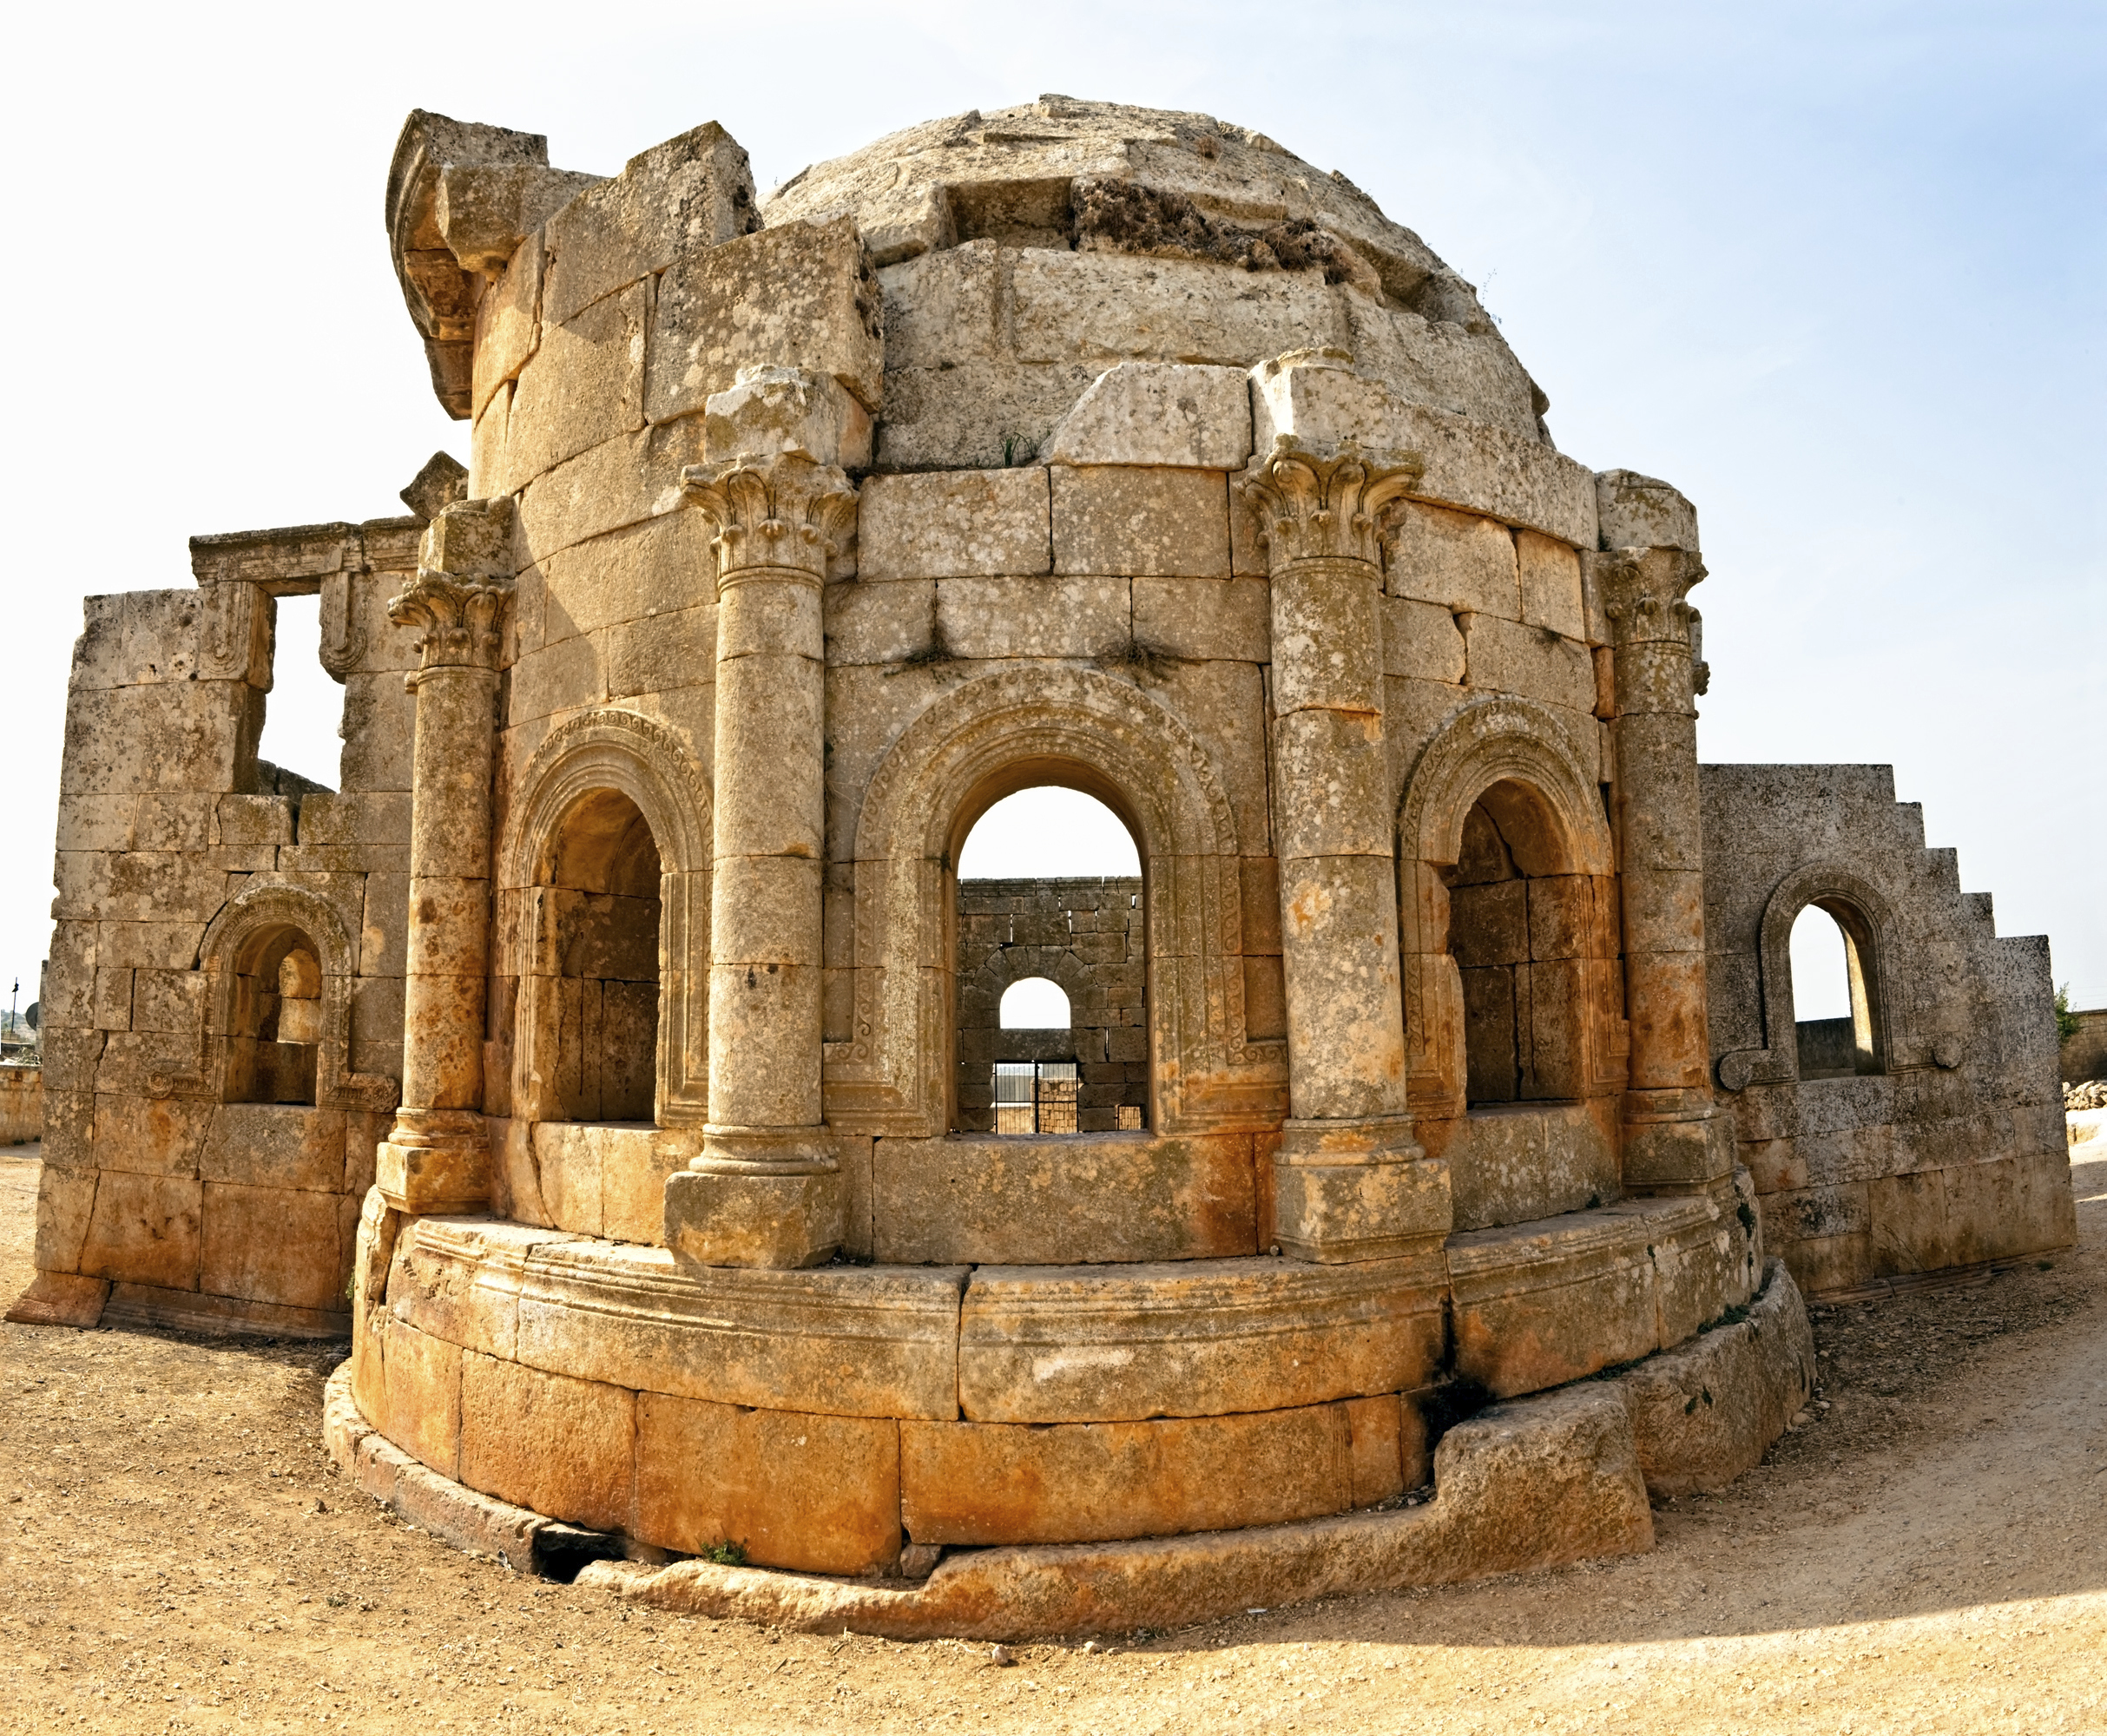 Ancient ruins in the Dead City of Qalb Lozeh, Syria